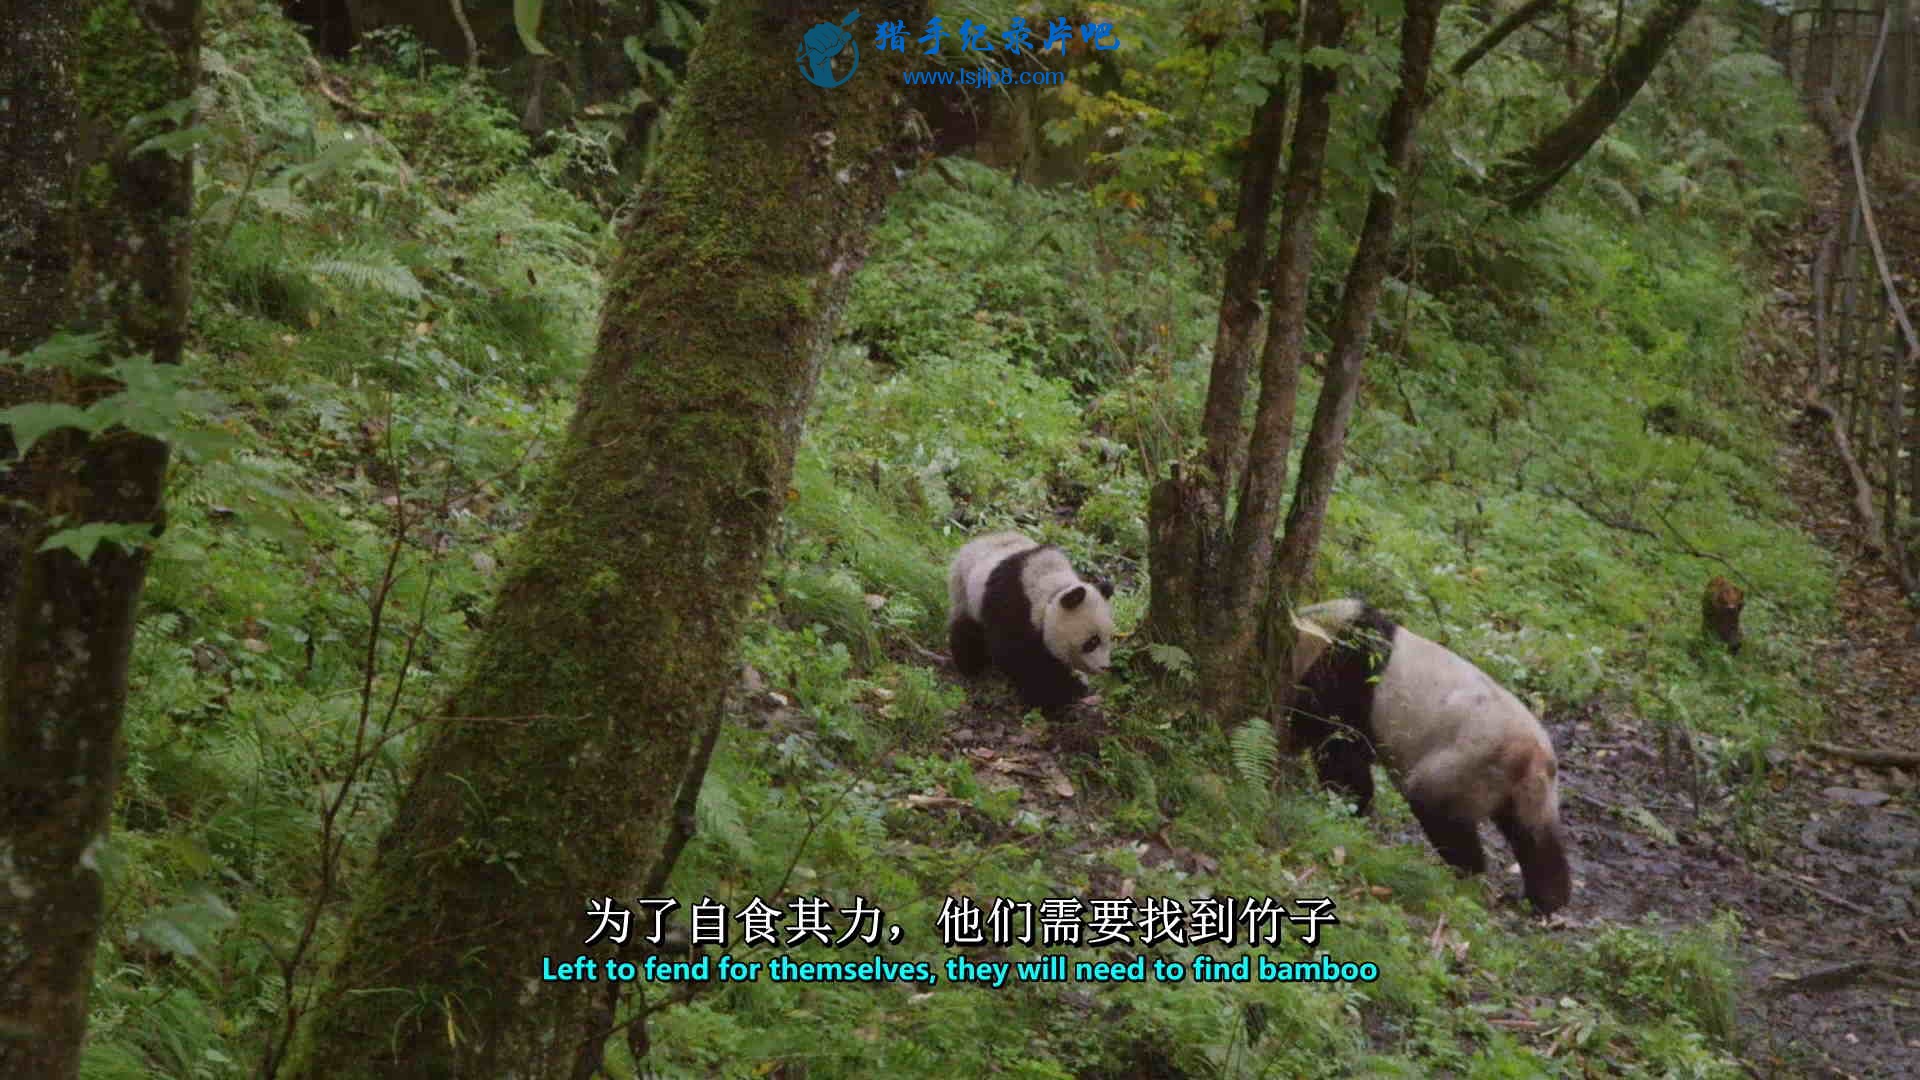 Pandas.The.Journey.Home.2014.1080p.BluRay.x264-SADPANDA.mkv_20200723_085232.666_看图王.jpg